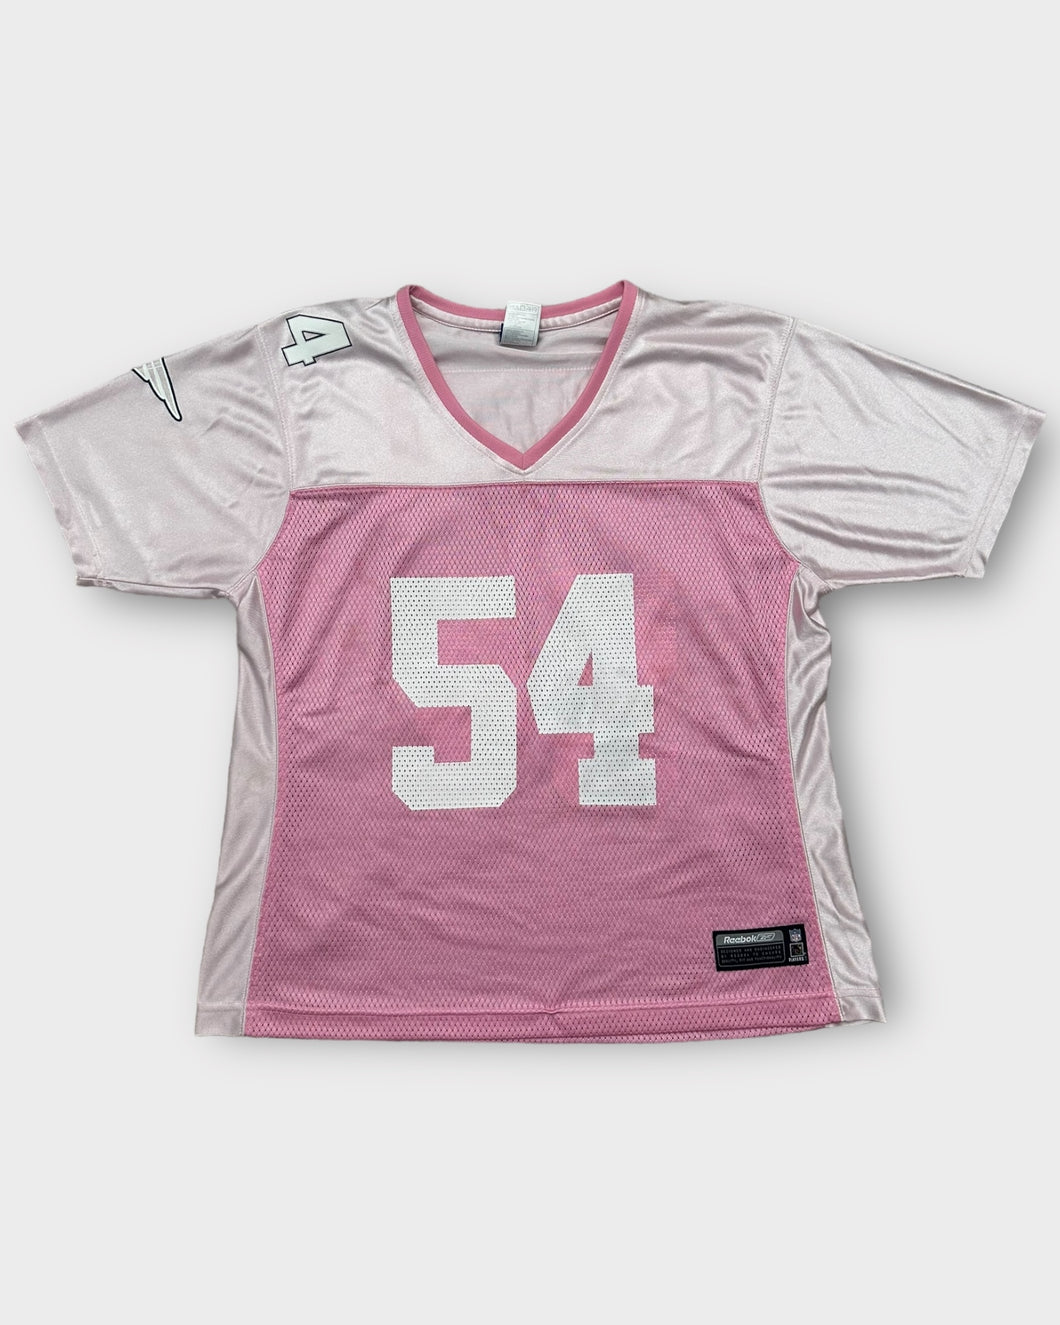 NFL Reebok Patriots Pink Football Jersey (XL)